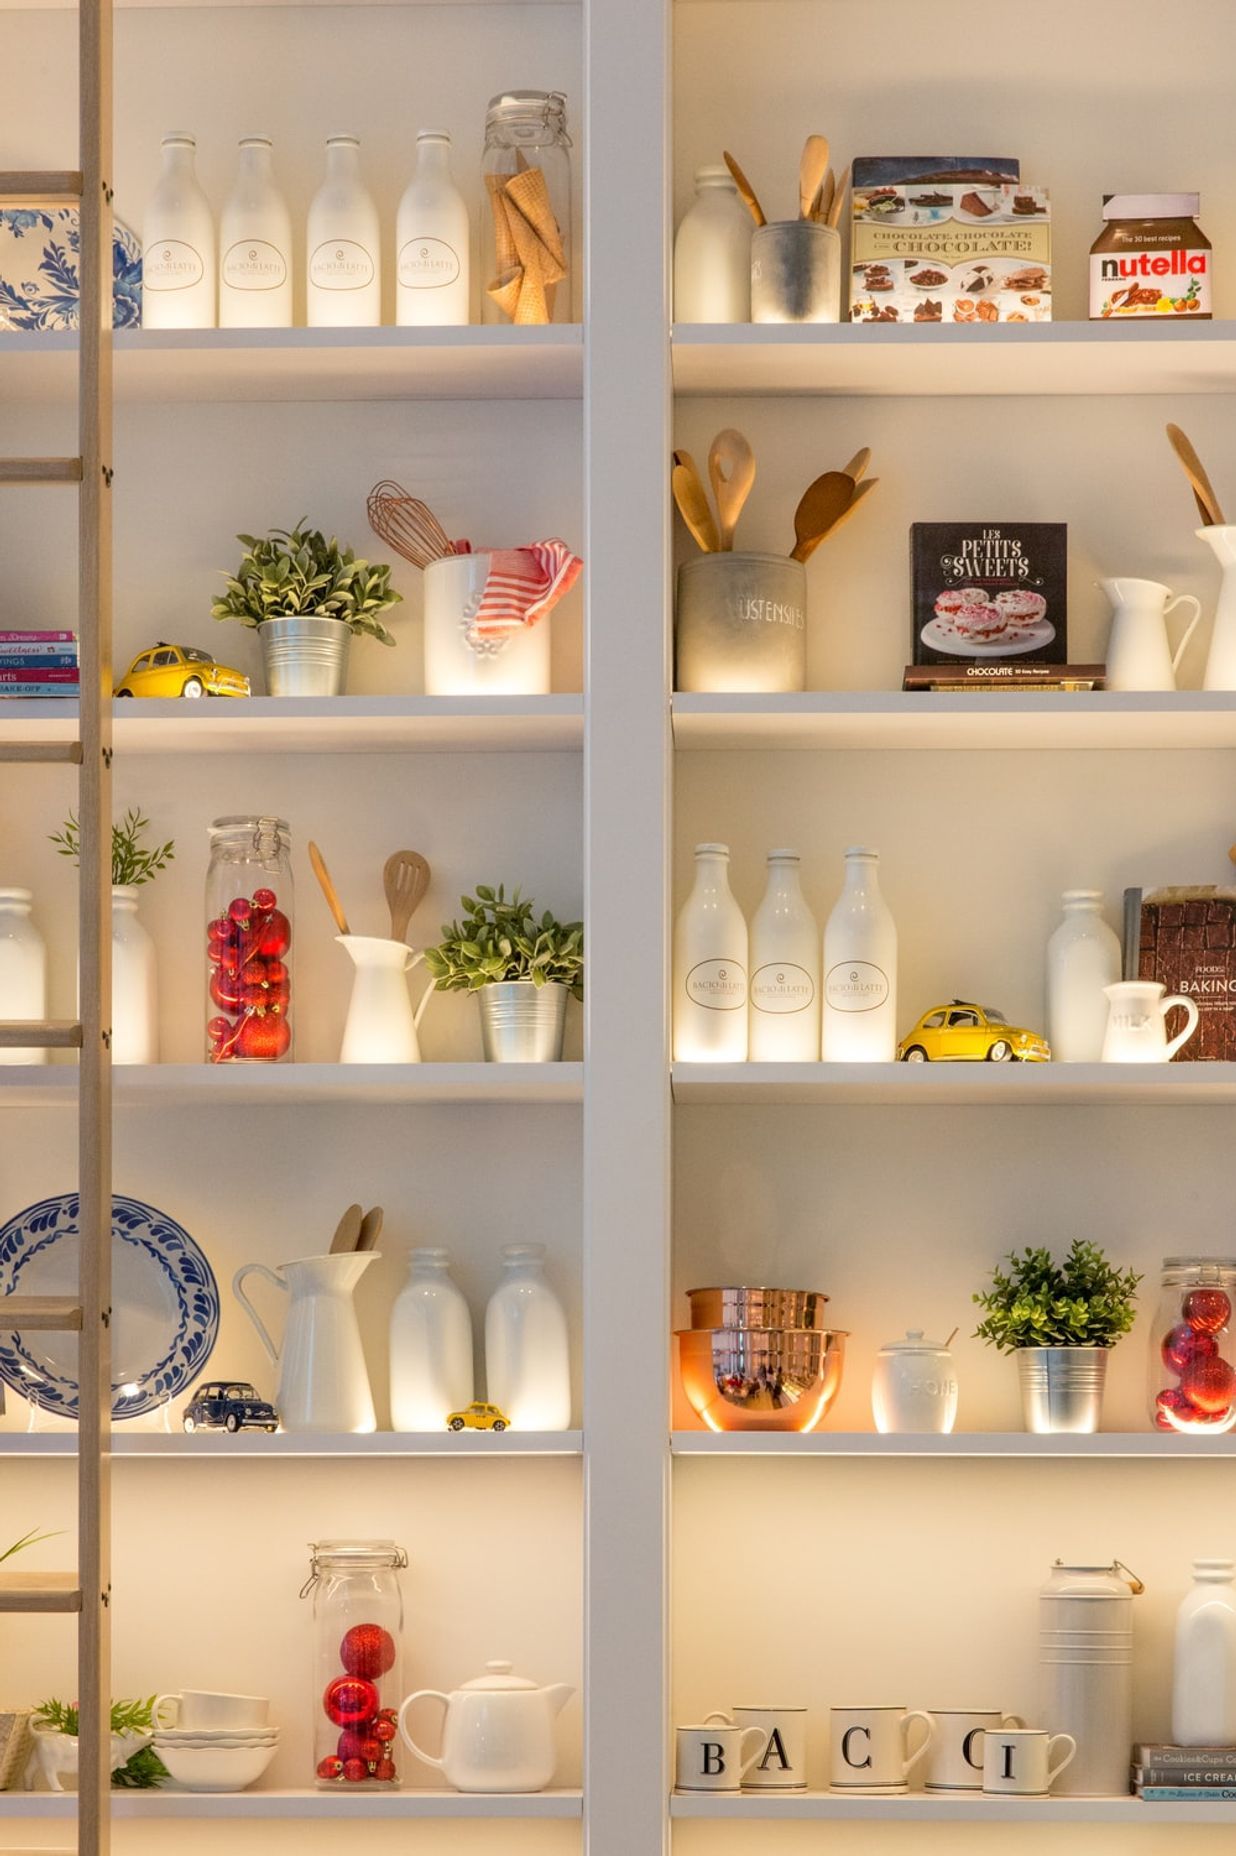 Lighting in shelves/pantry | Photo Credit - Unsplash